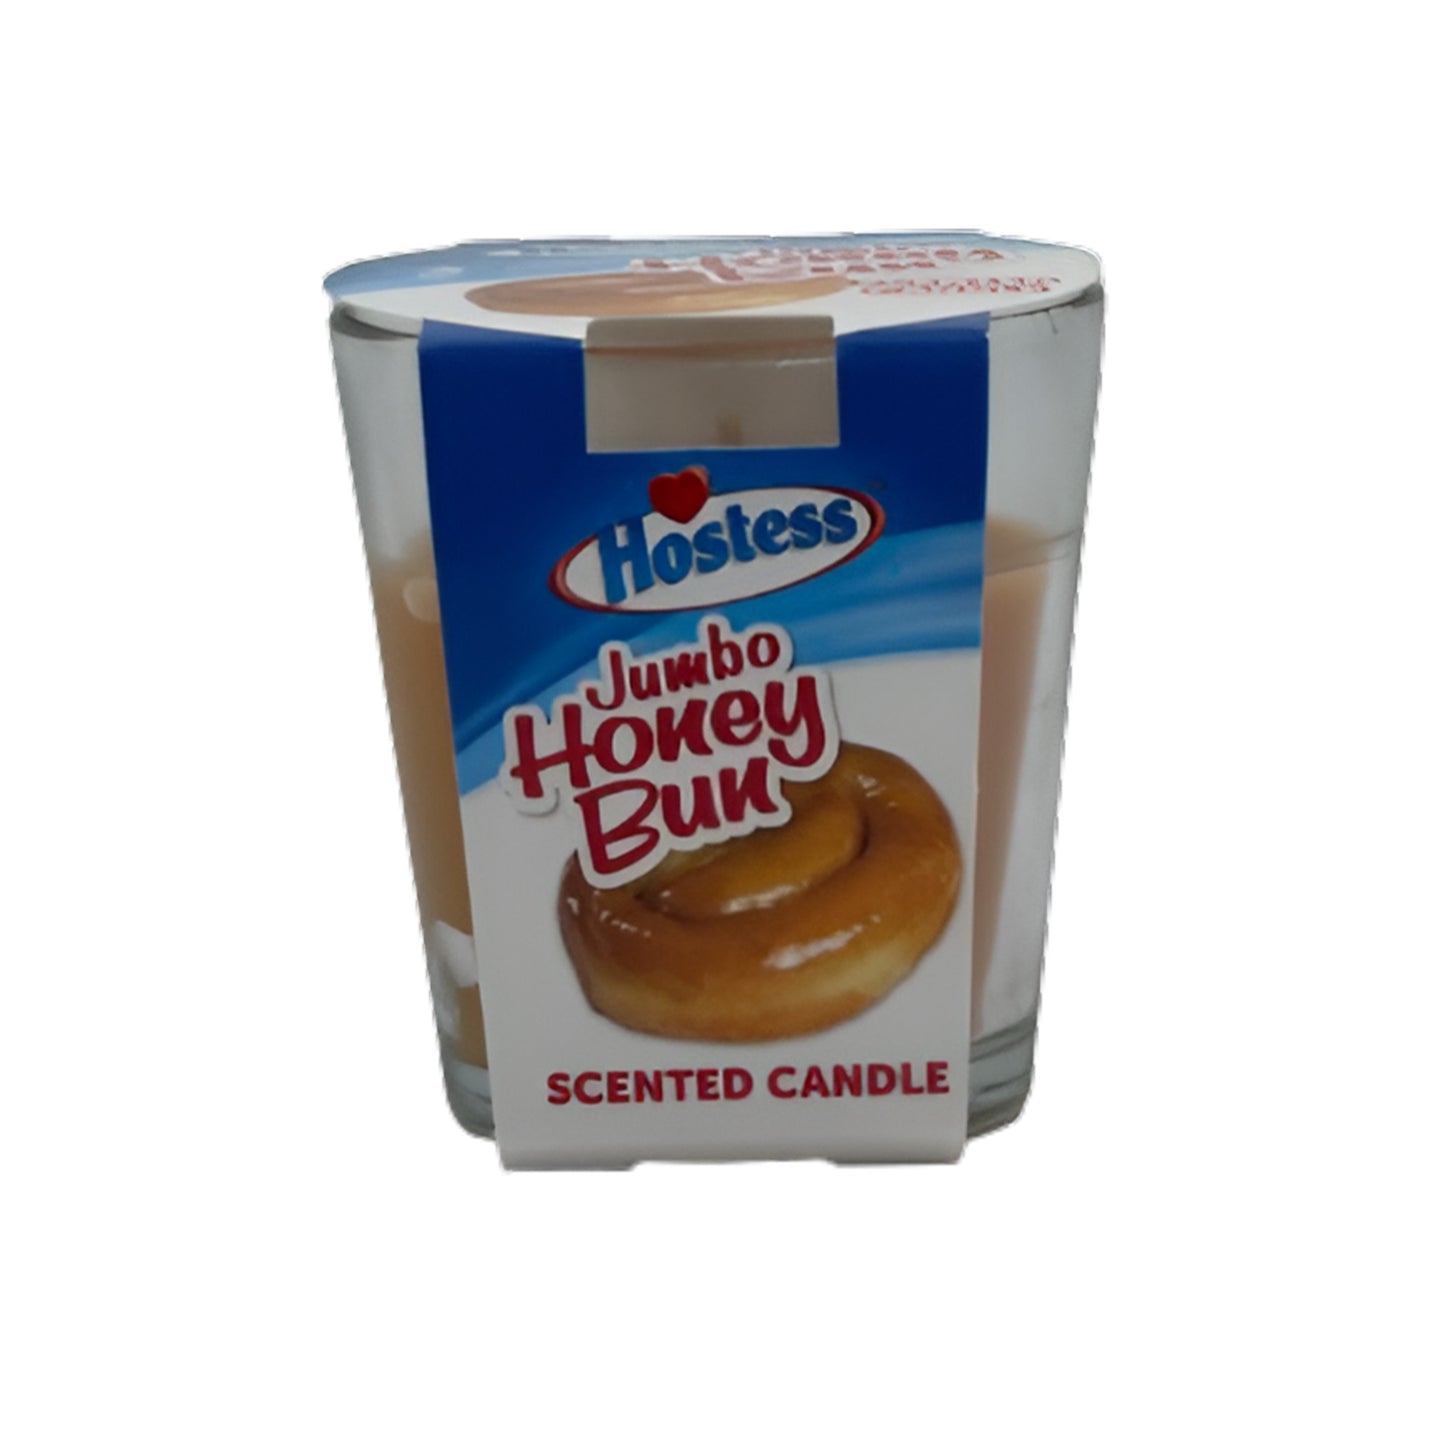 Hostess Jumbo Honey Buns Scented Candle